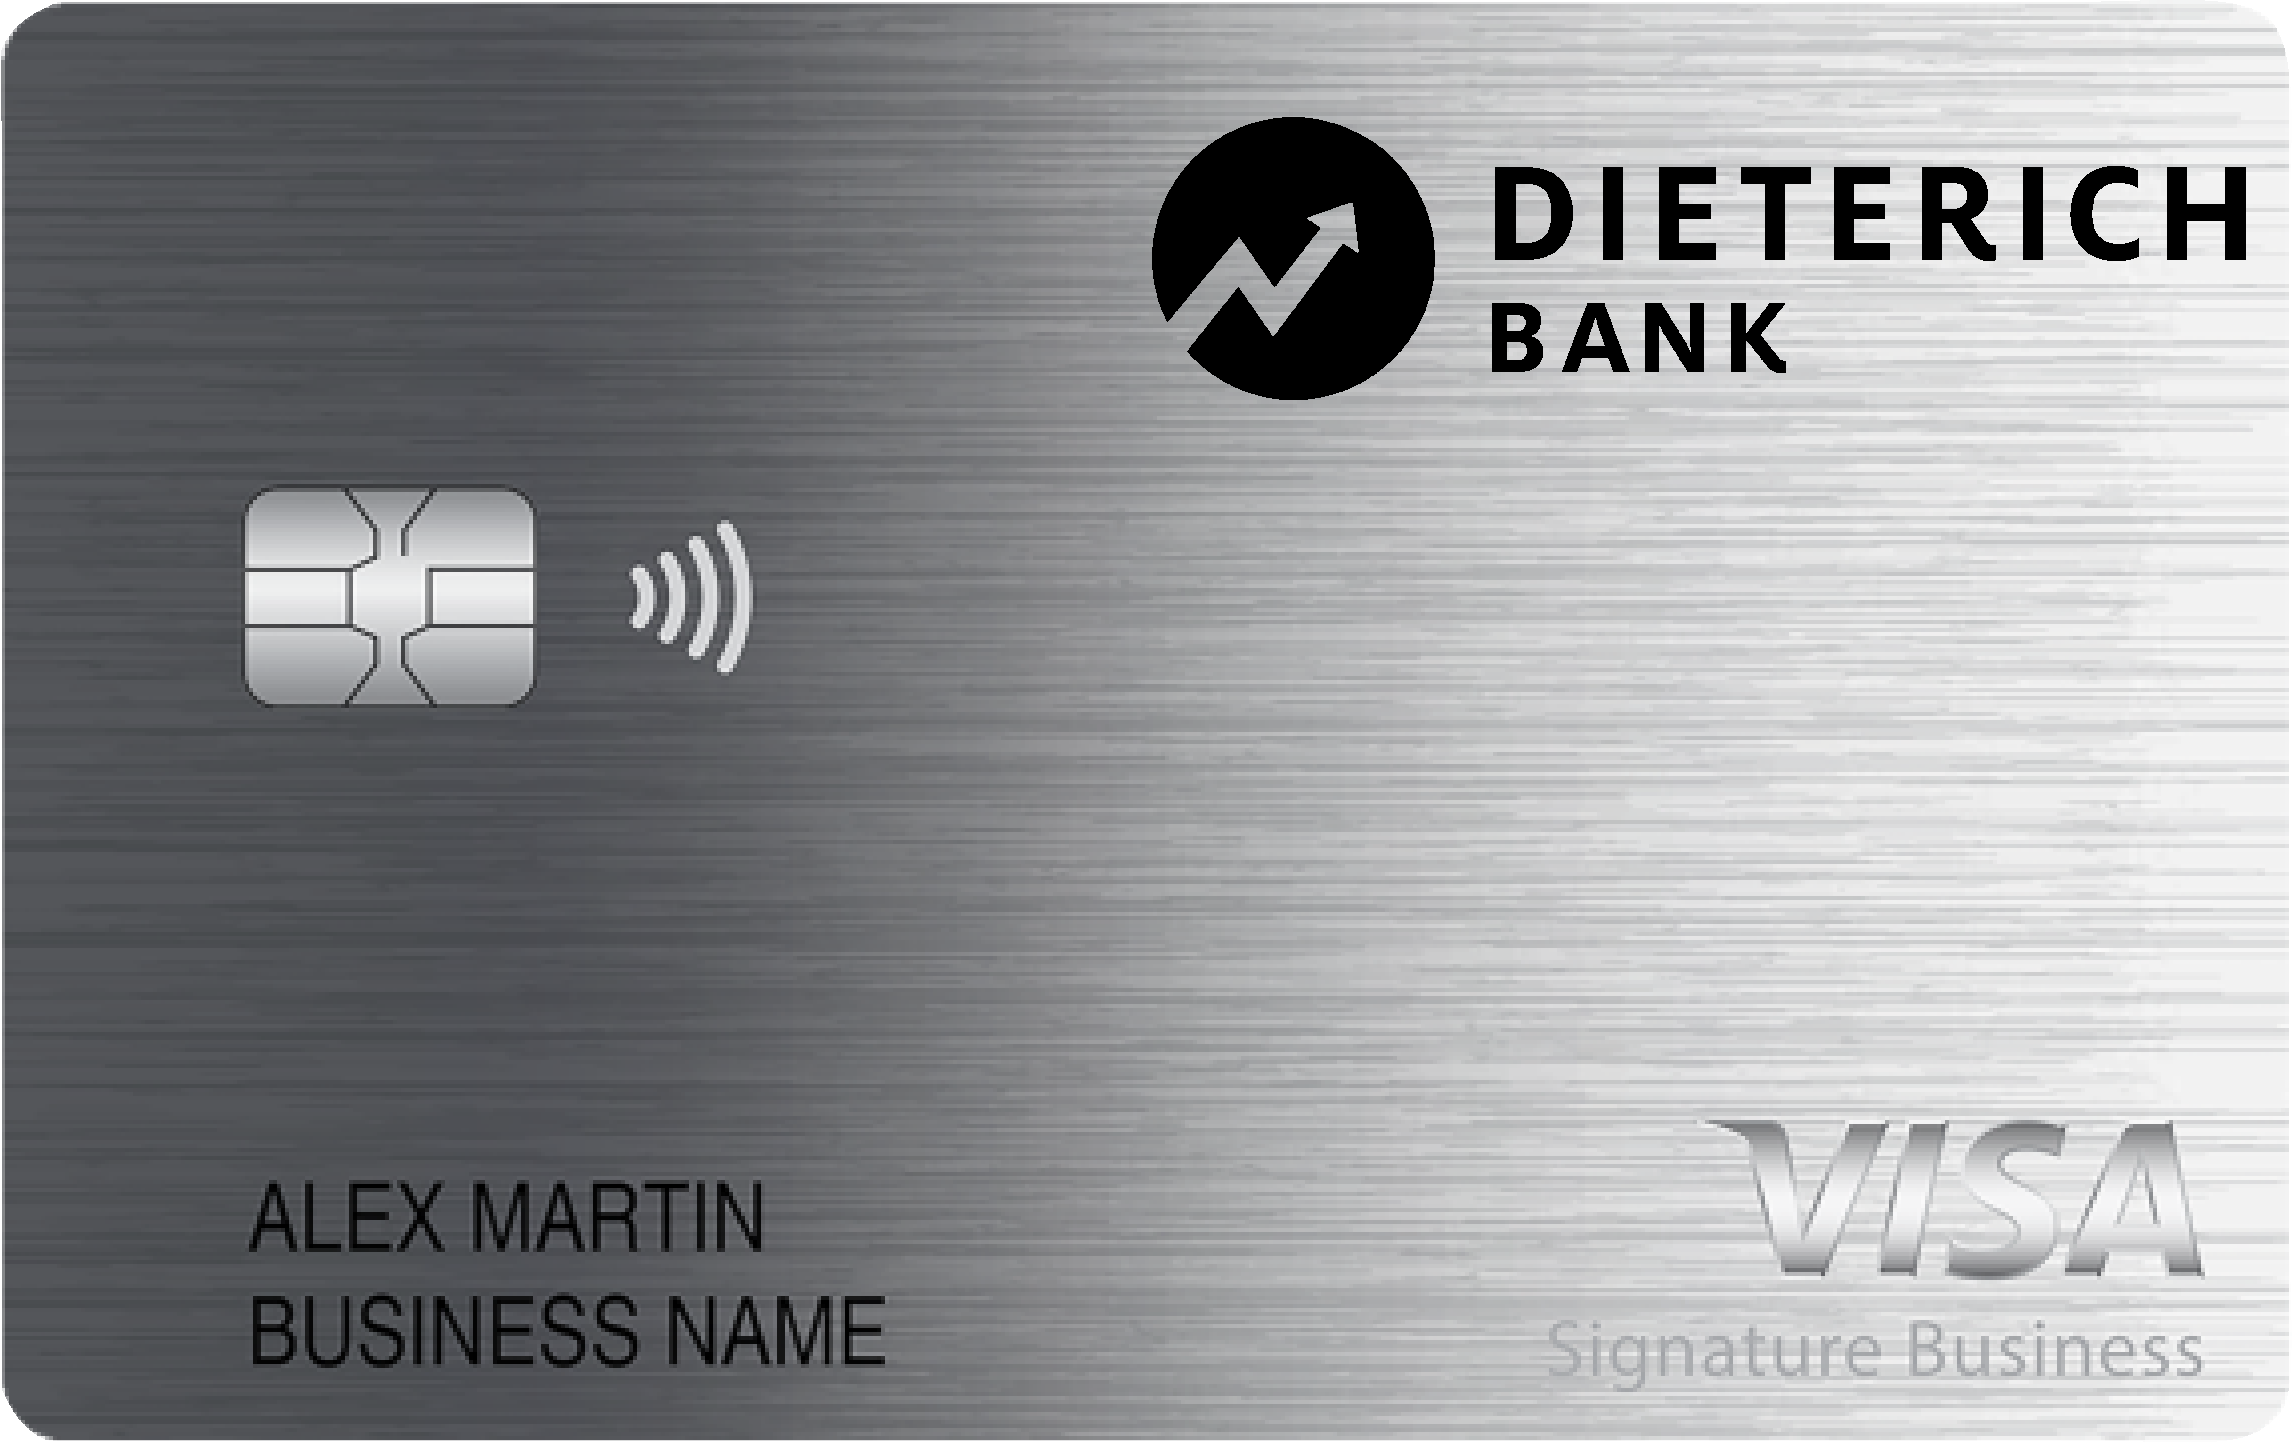 Dieterich Bank Smart Business Rewards Card